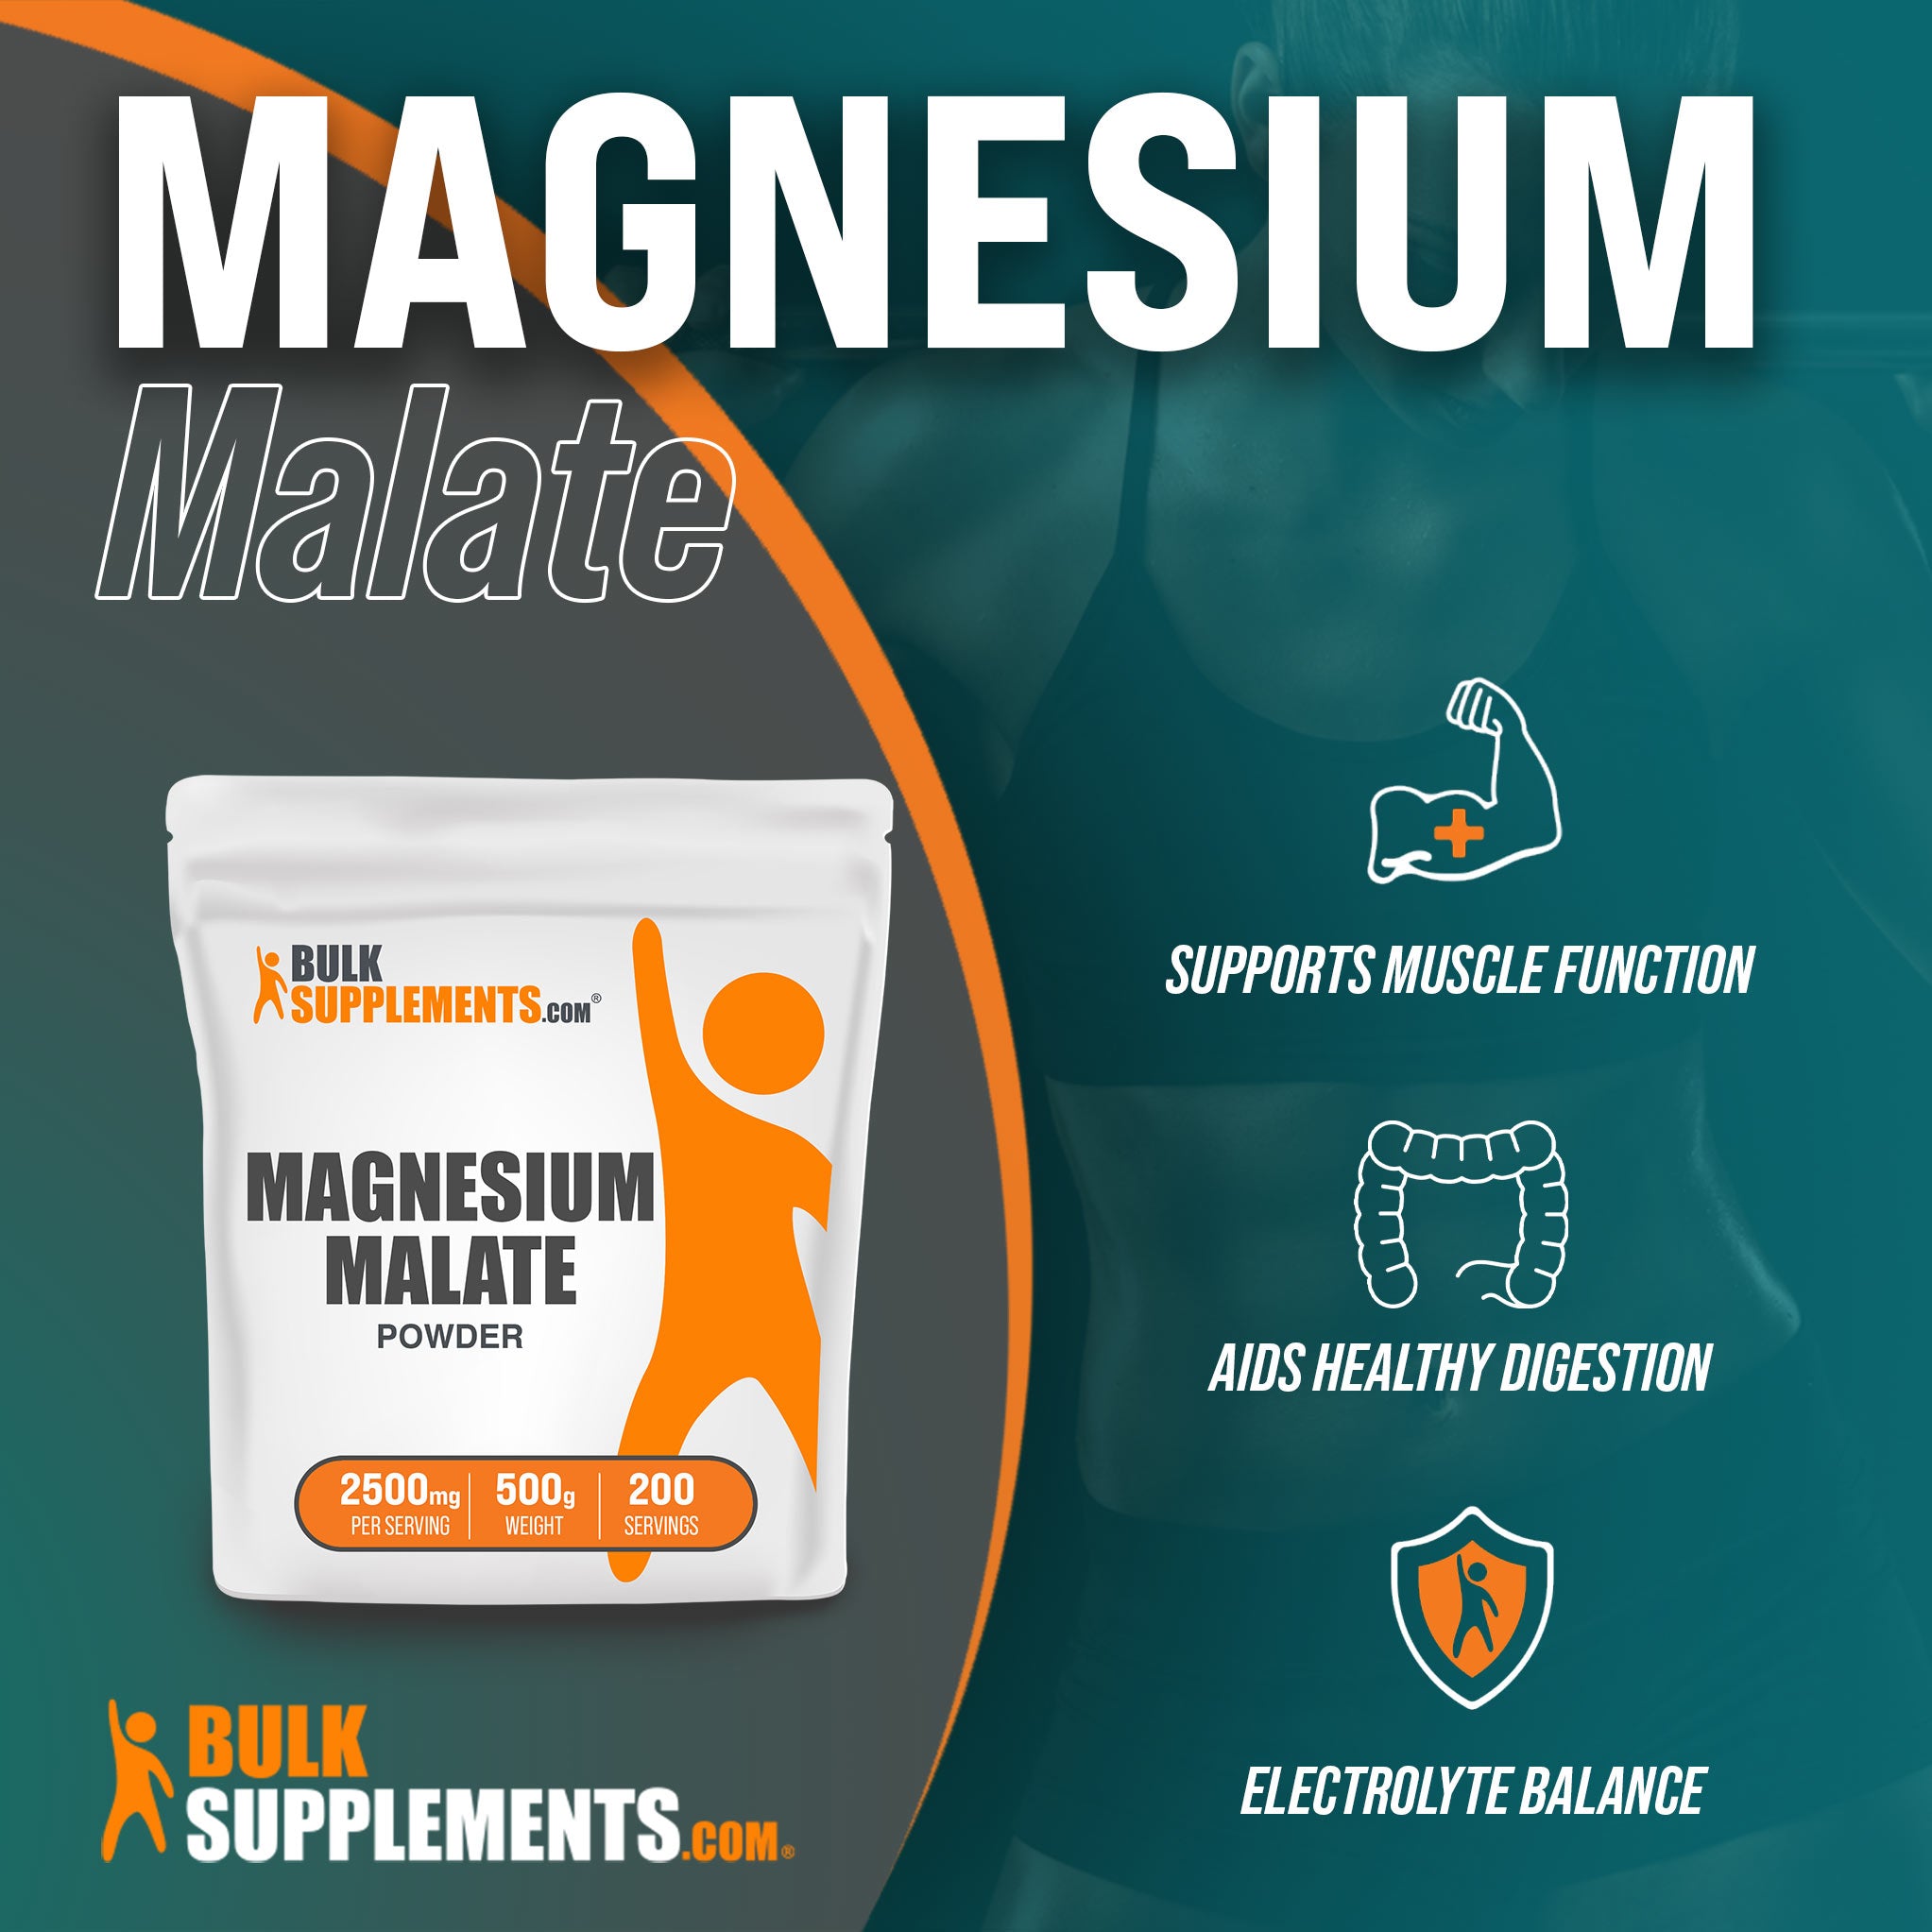 Magnesium Malate Powder Benefits from Bulk Supplements